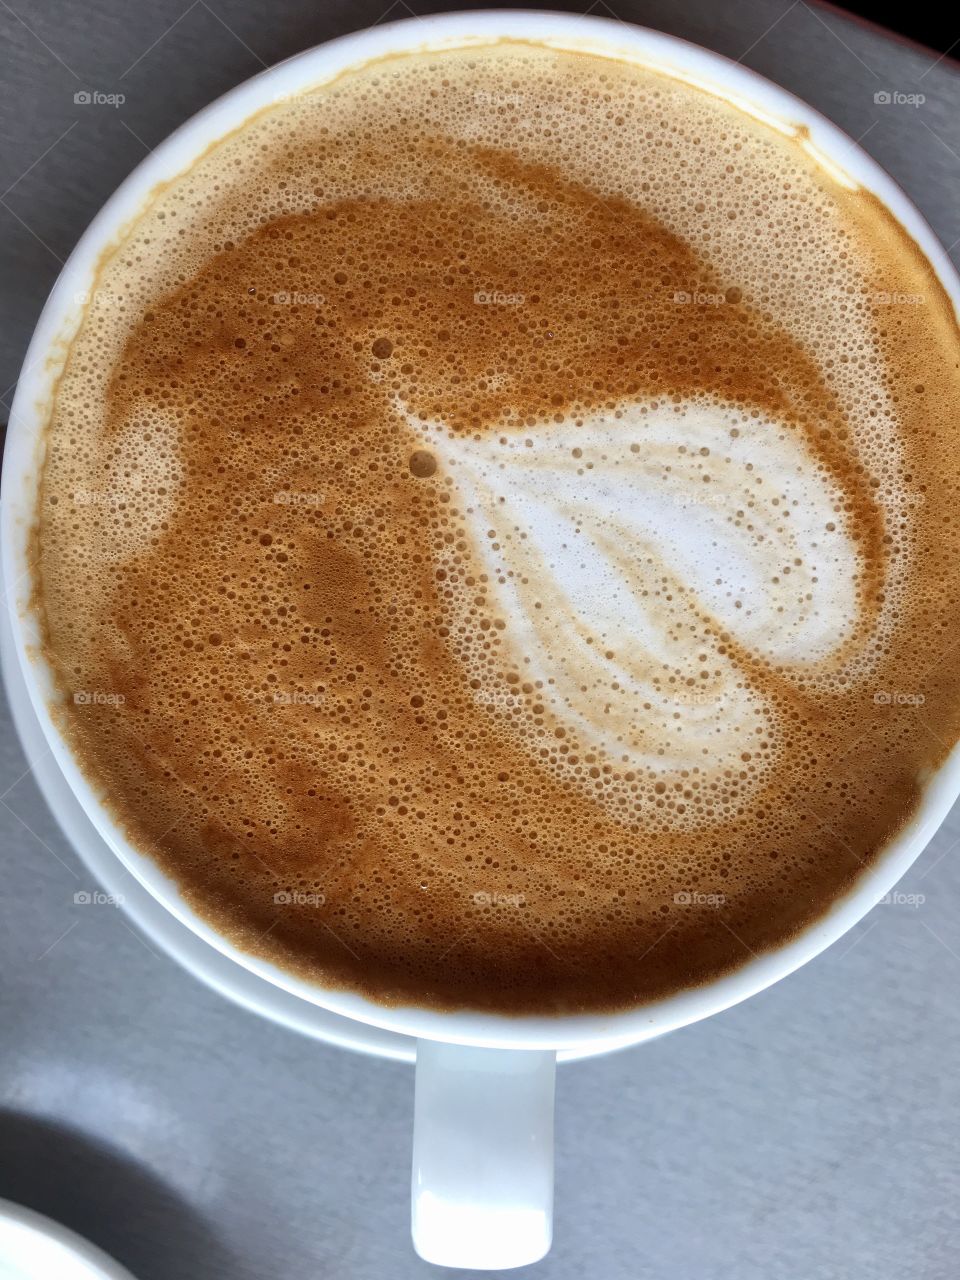 Love in a coffee cup, heart shape in Cafe latte 